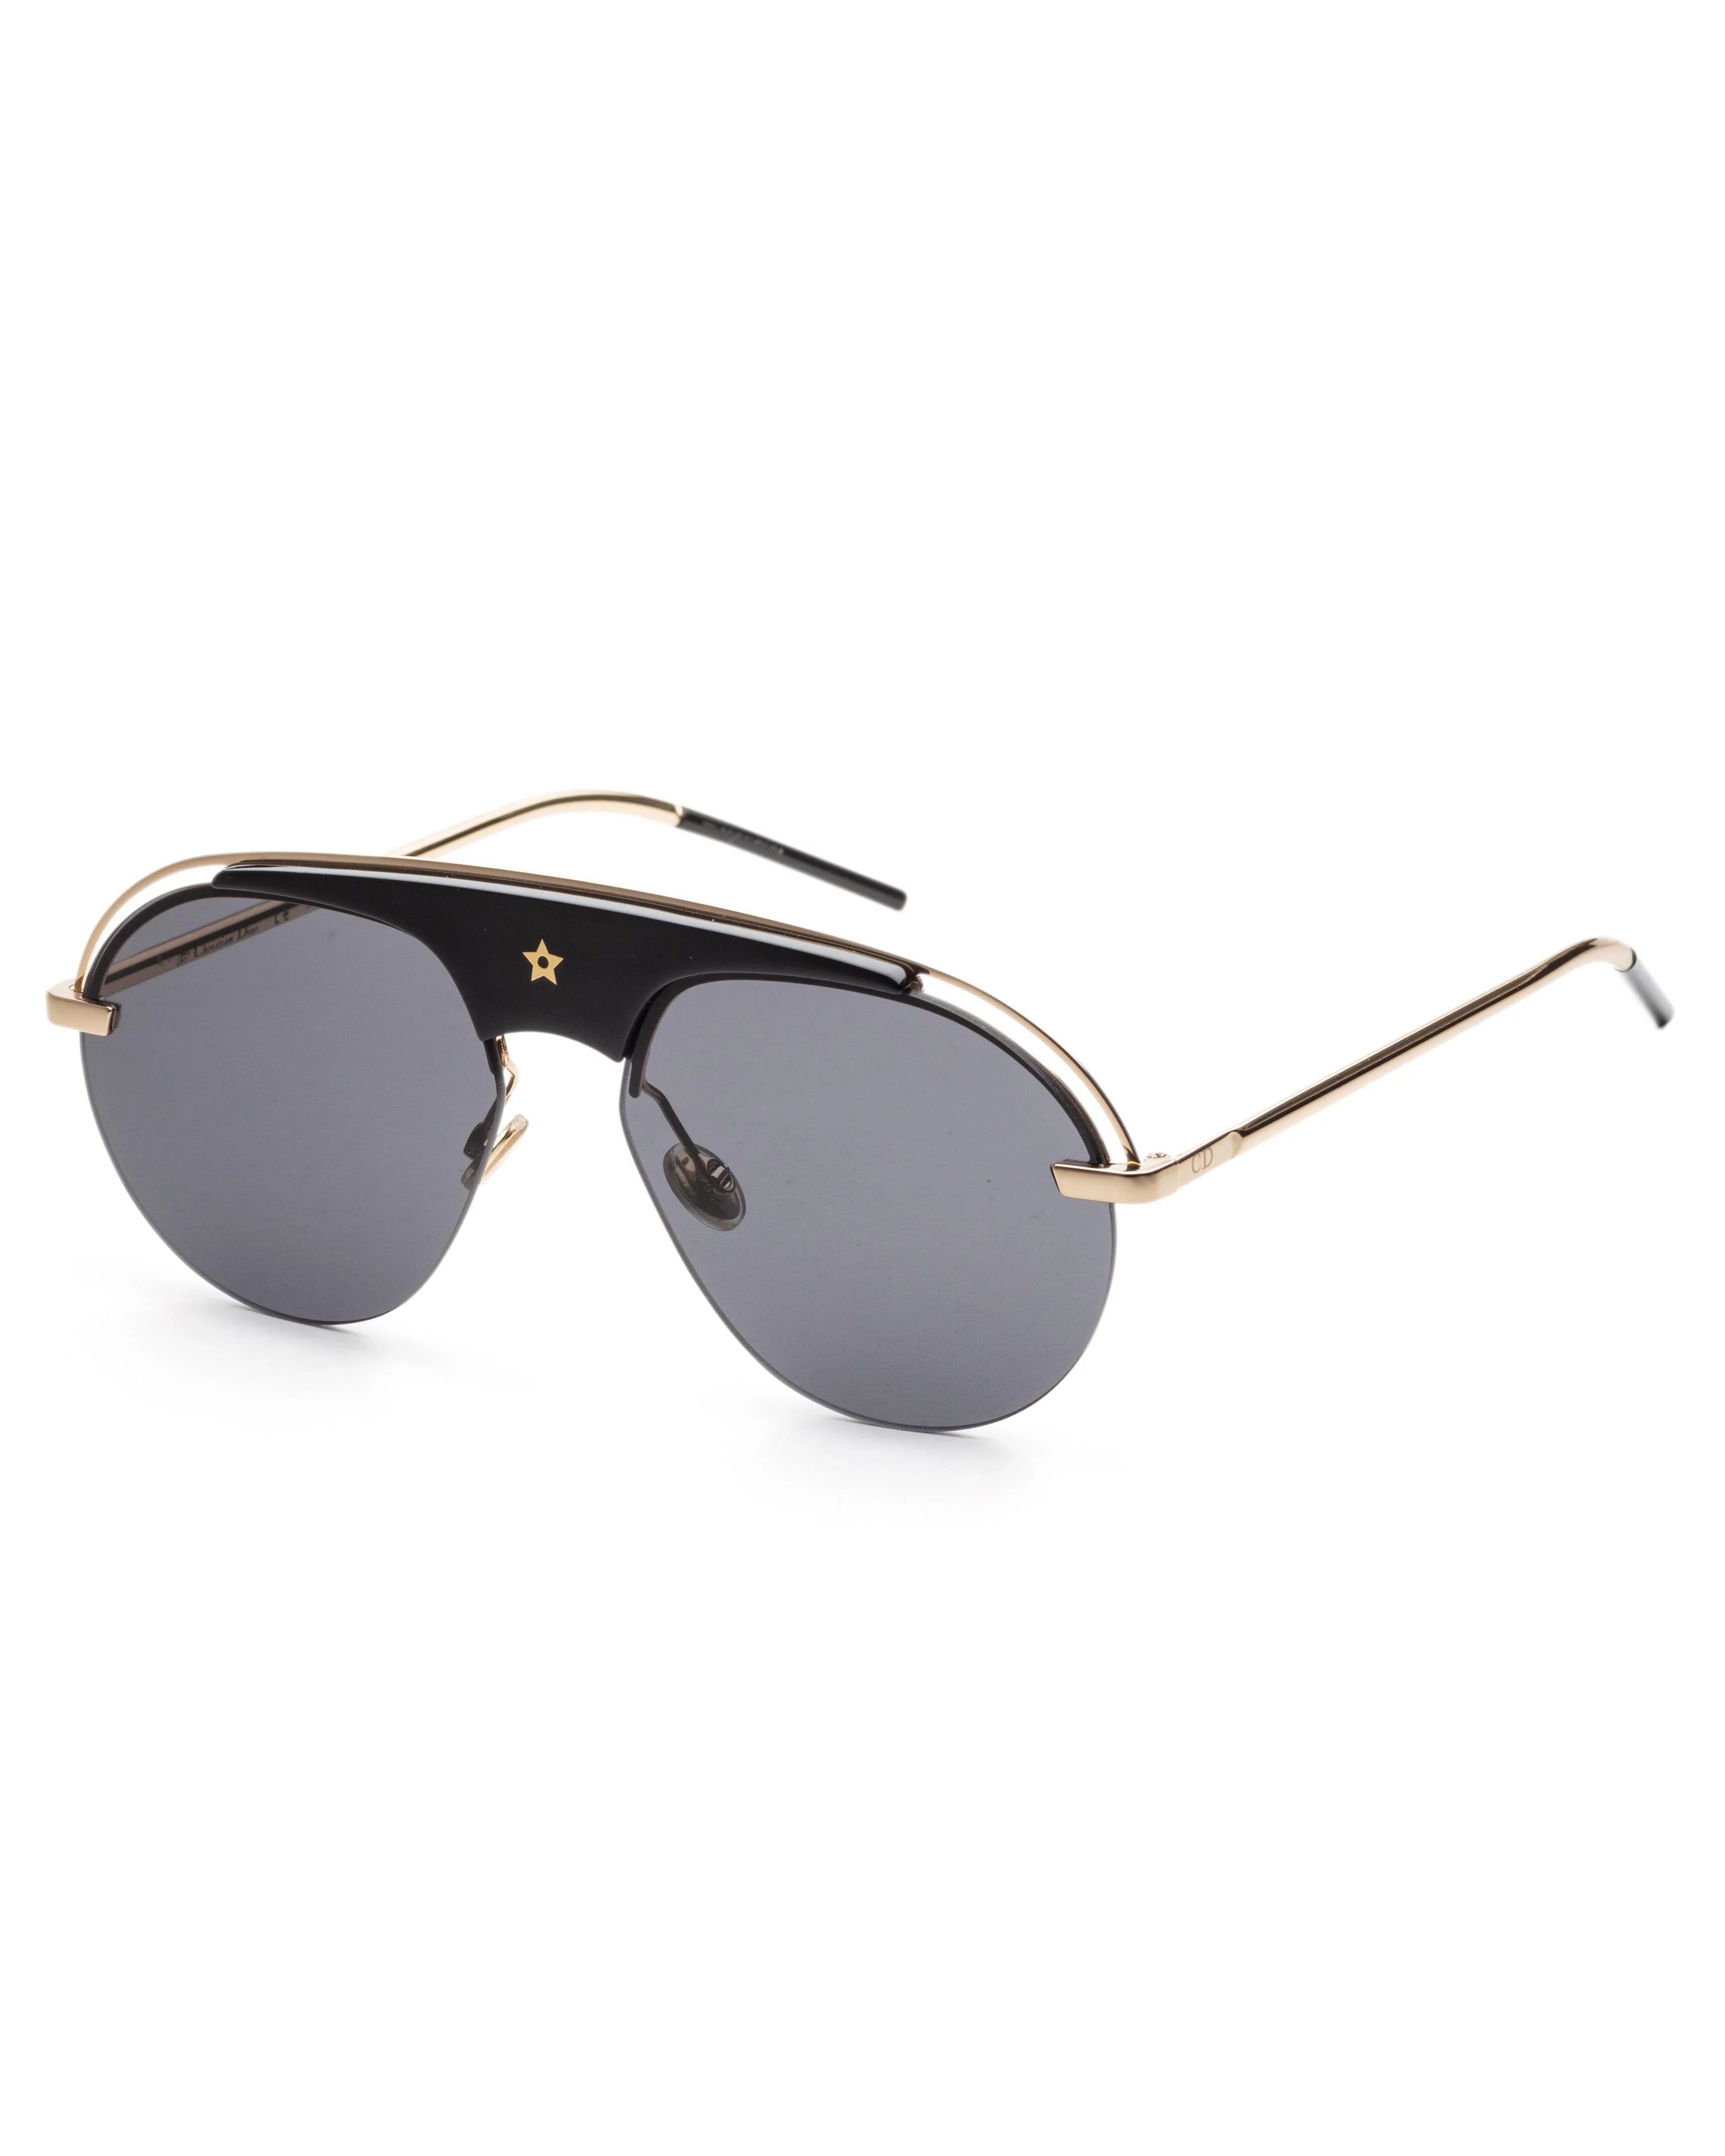 Christian Dior Women's DIOREVOLS-02M2-2K Diorev 58mm Gold and Black Sunglasses | Walmart (US)